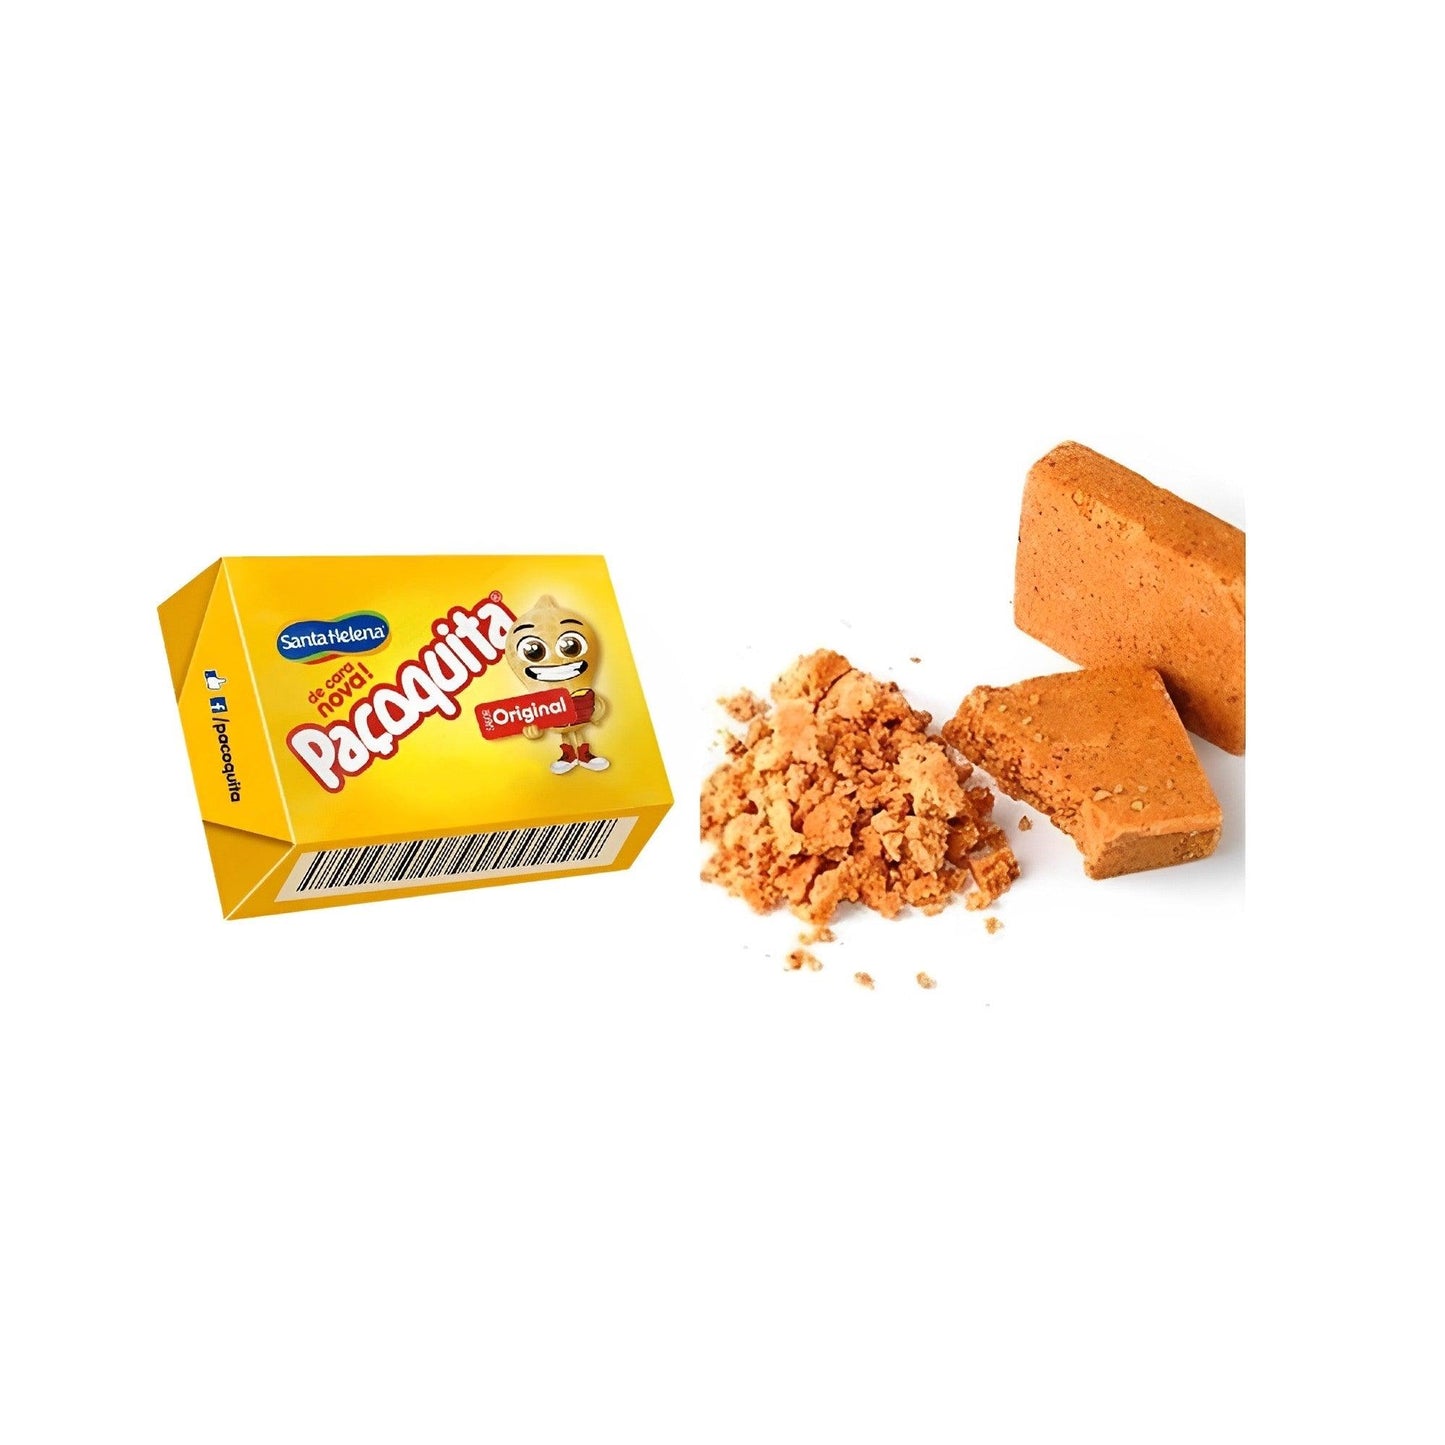 Paçoquita Brazilian Sweet Ground Peanut - 35.27 oz. (Pack of 3) - Brazilian Shop